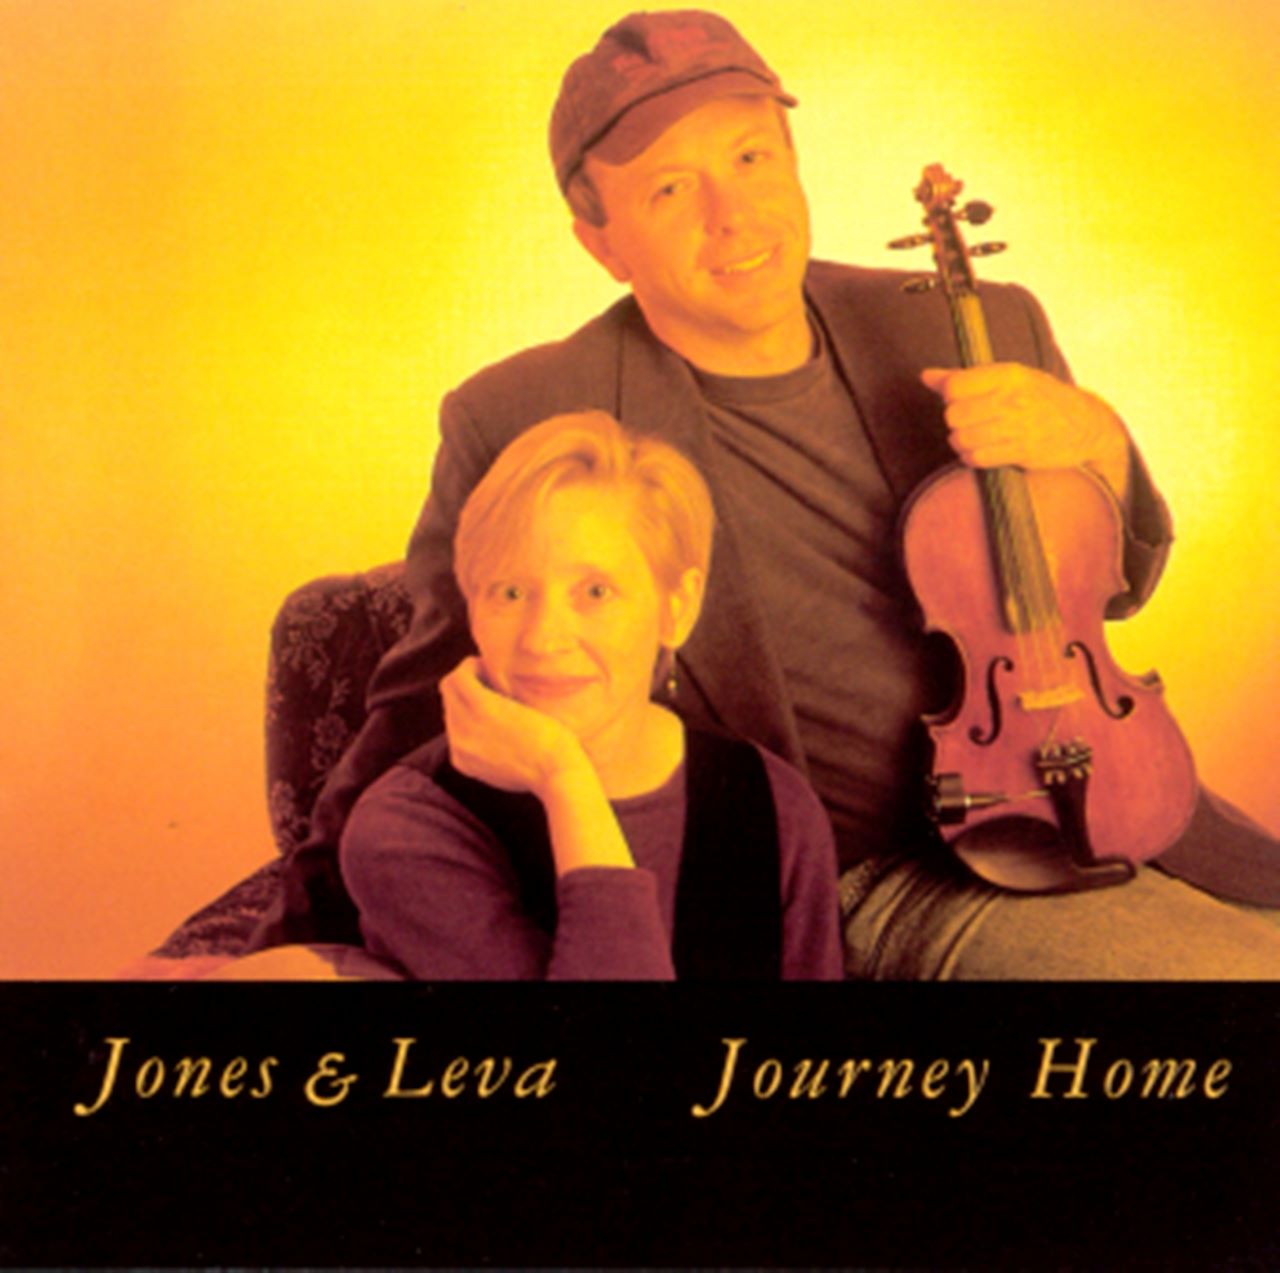 Jones & Leva - Journey Home cover album